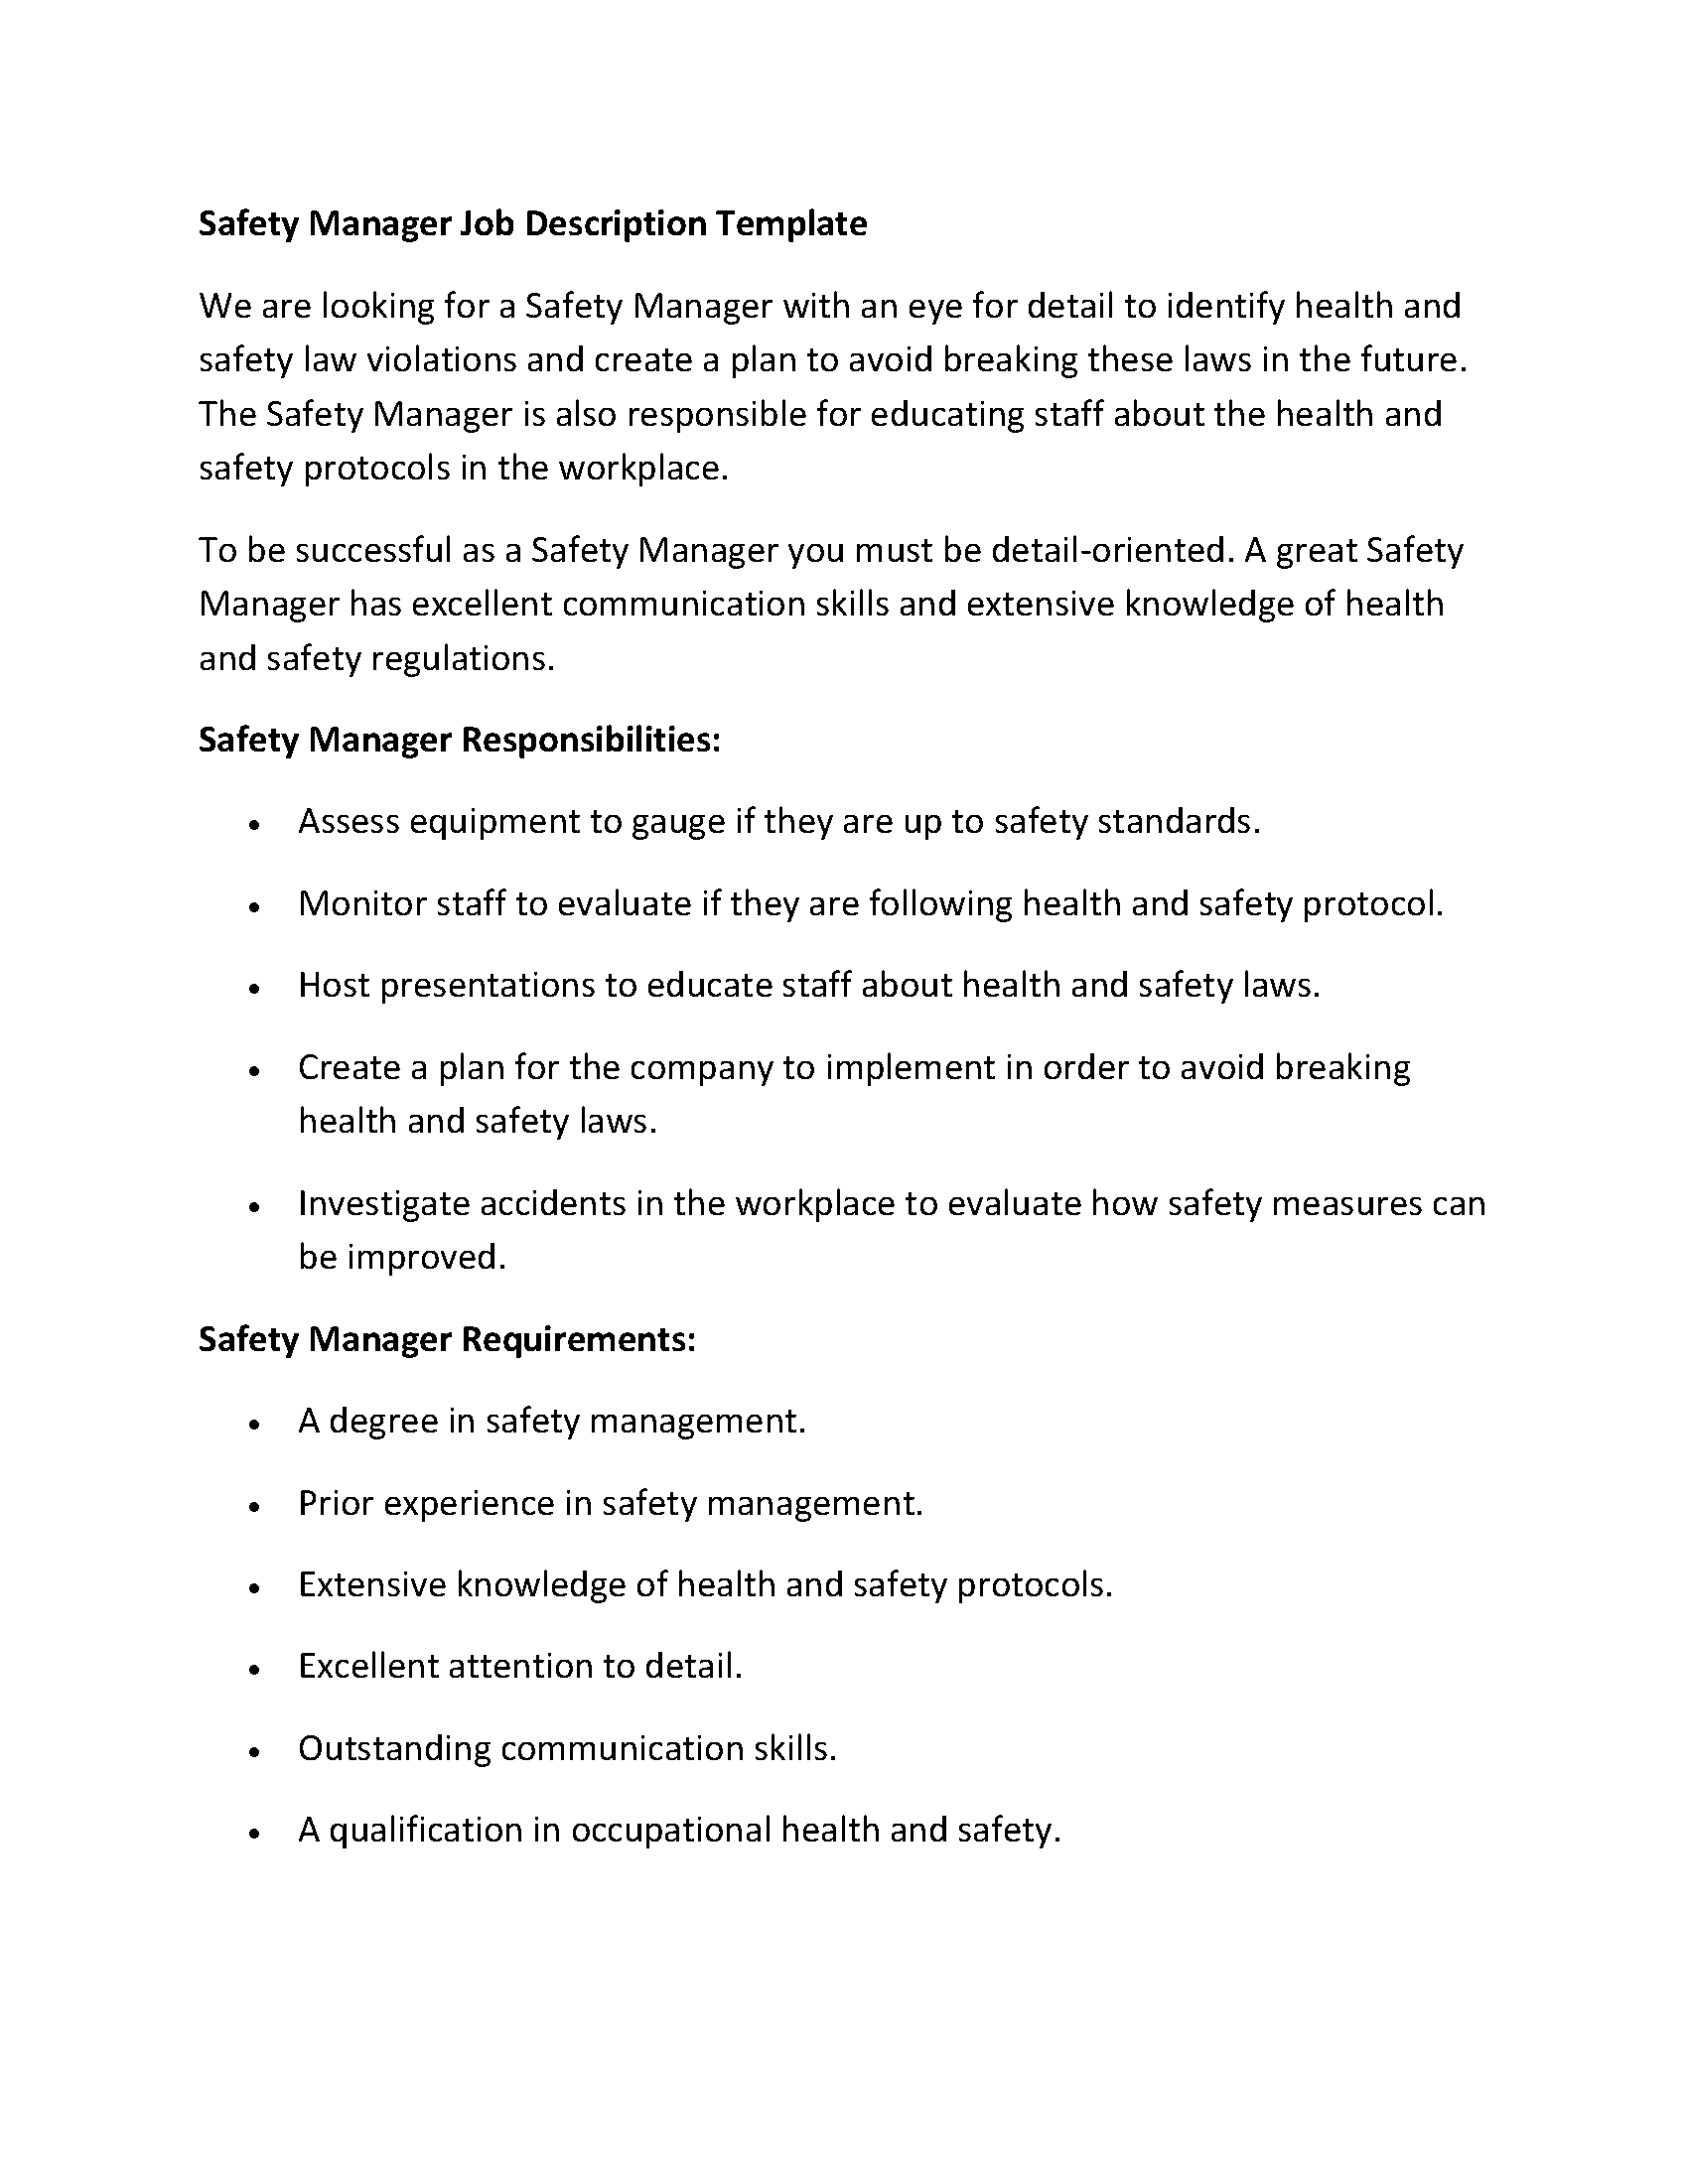 Safety Manager Job Description Template